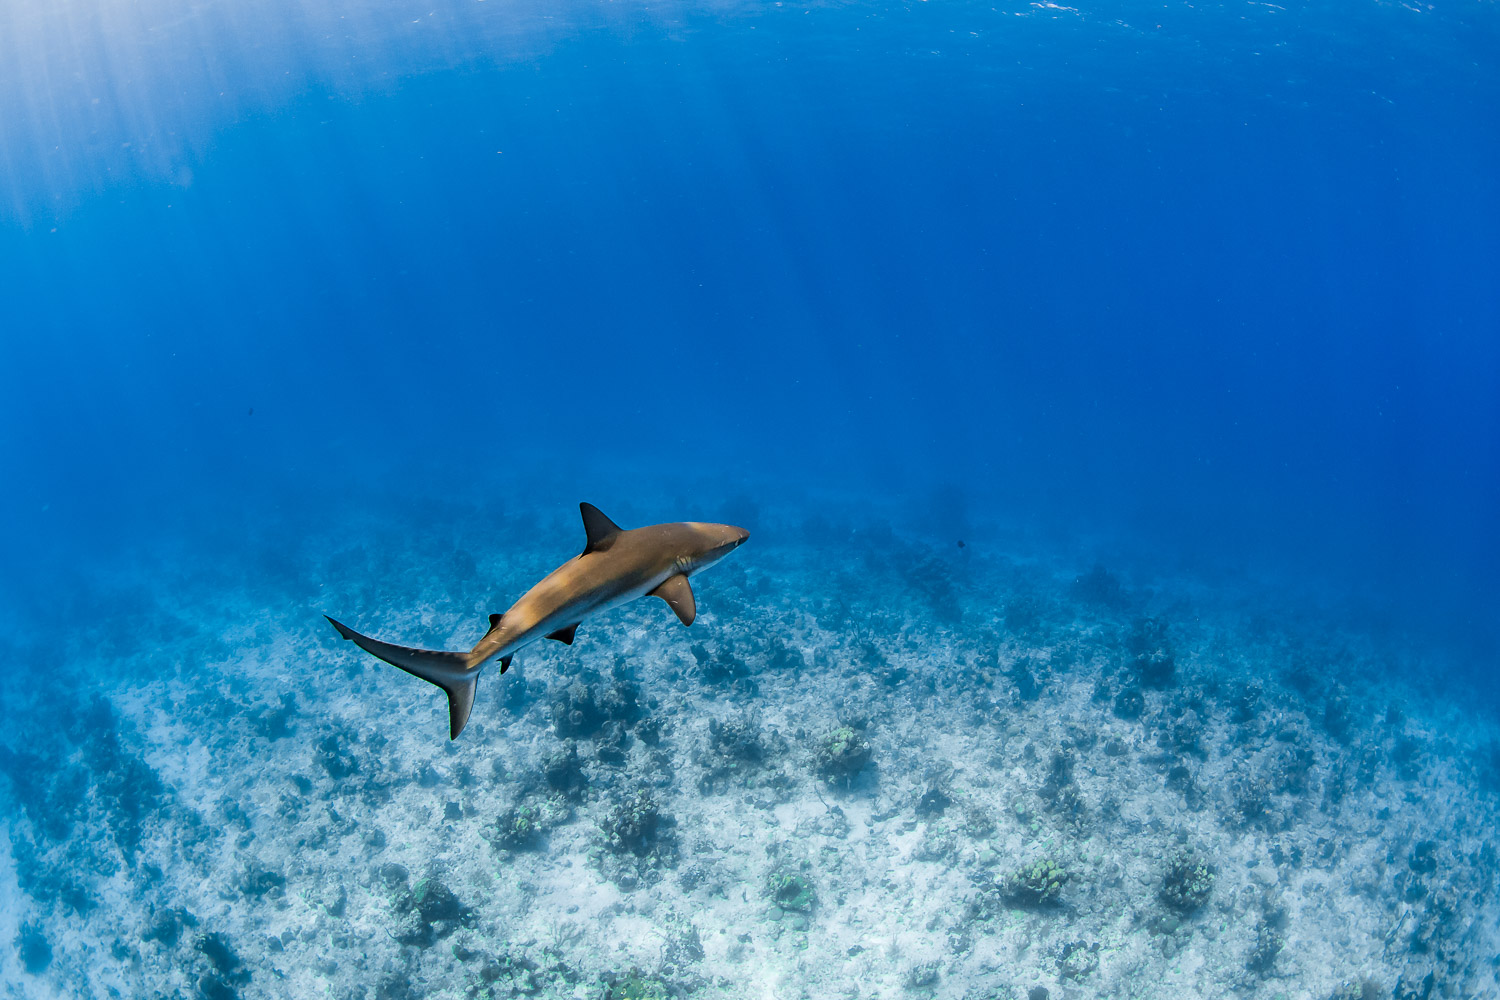 Carribean Reef Shark (Carcharhinus perezii), Turks and Caicos Islands